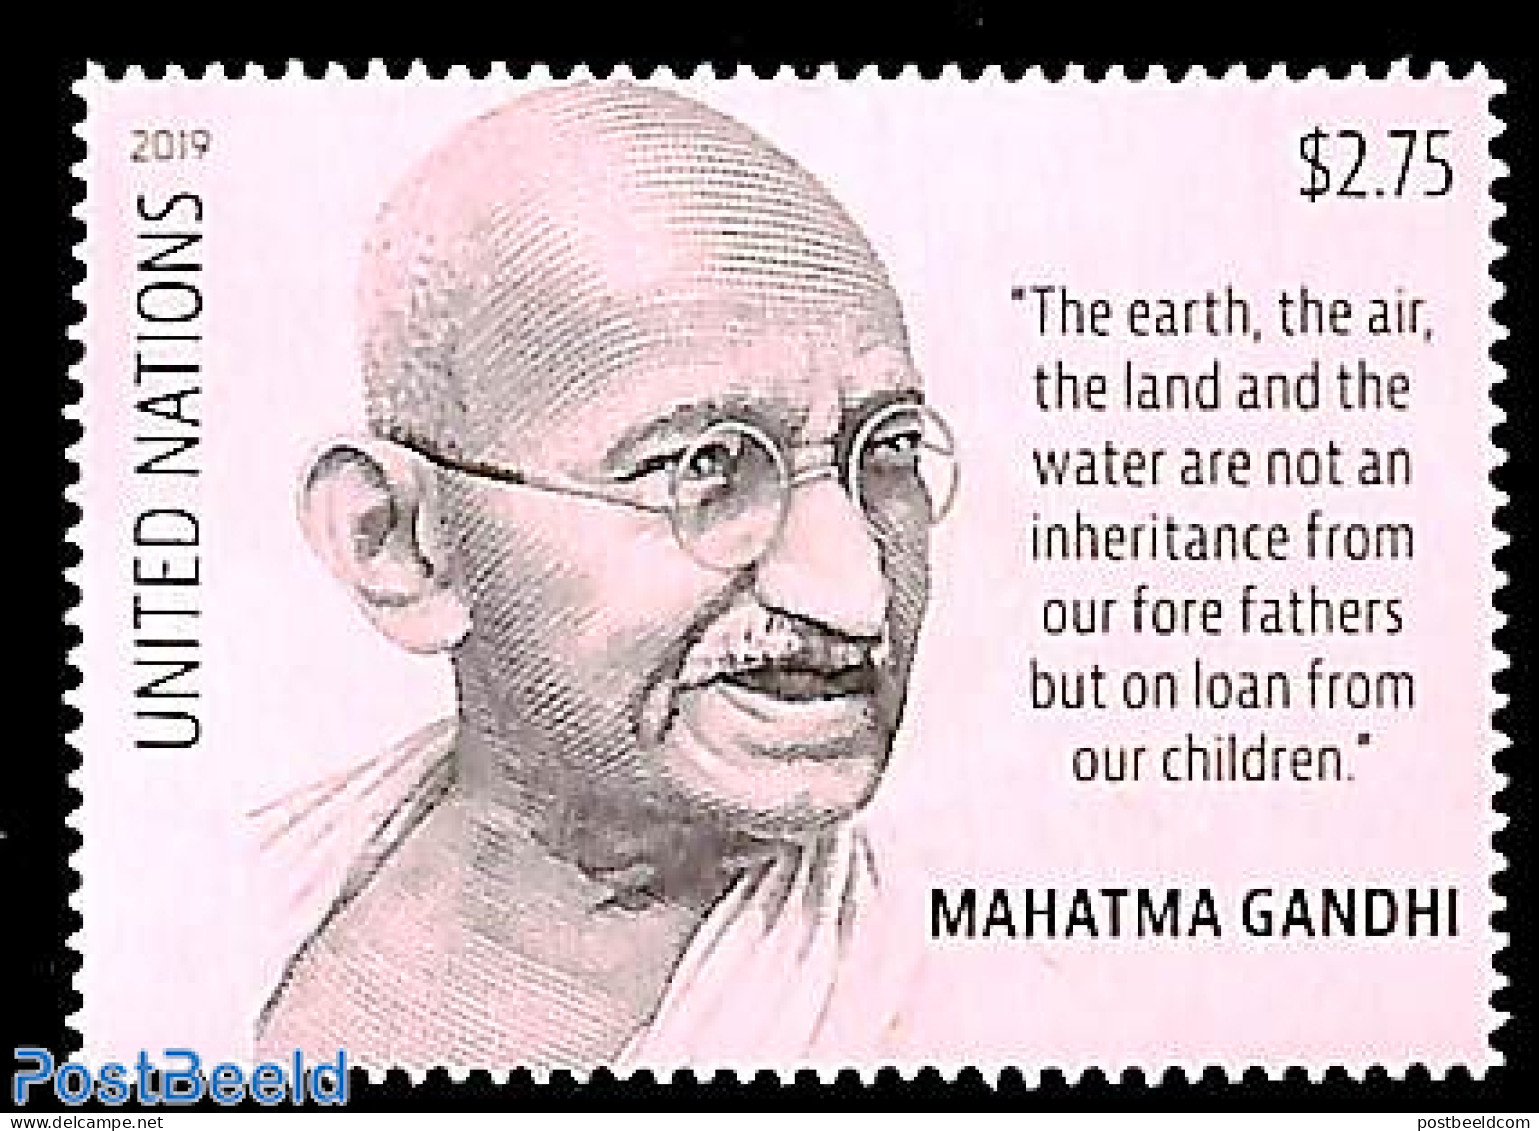 United Nations, New York 2019 M. Gandhi 150th Birth Anniversary 1v, Mint NH, History - Gandhi - Mahatma Gandhi